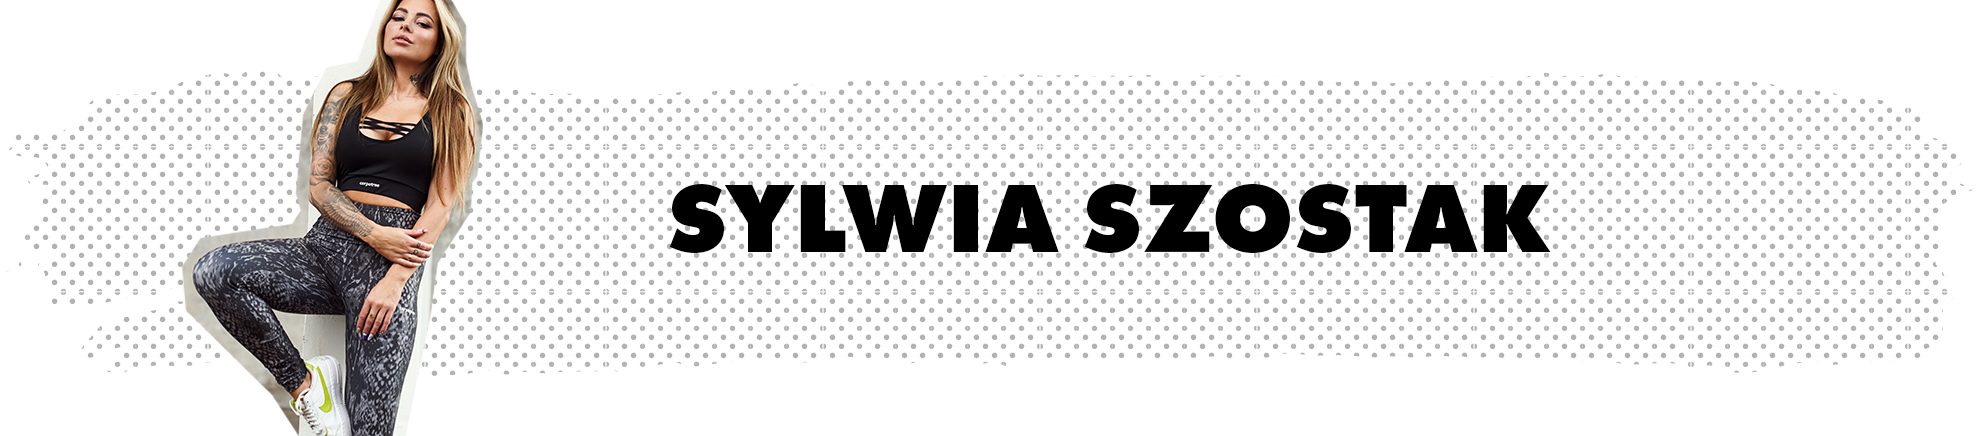 Sylwia Szostak - Carpatree brand ambassador